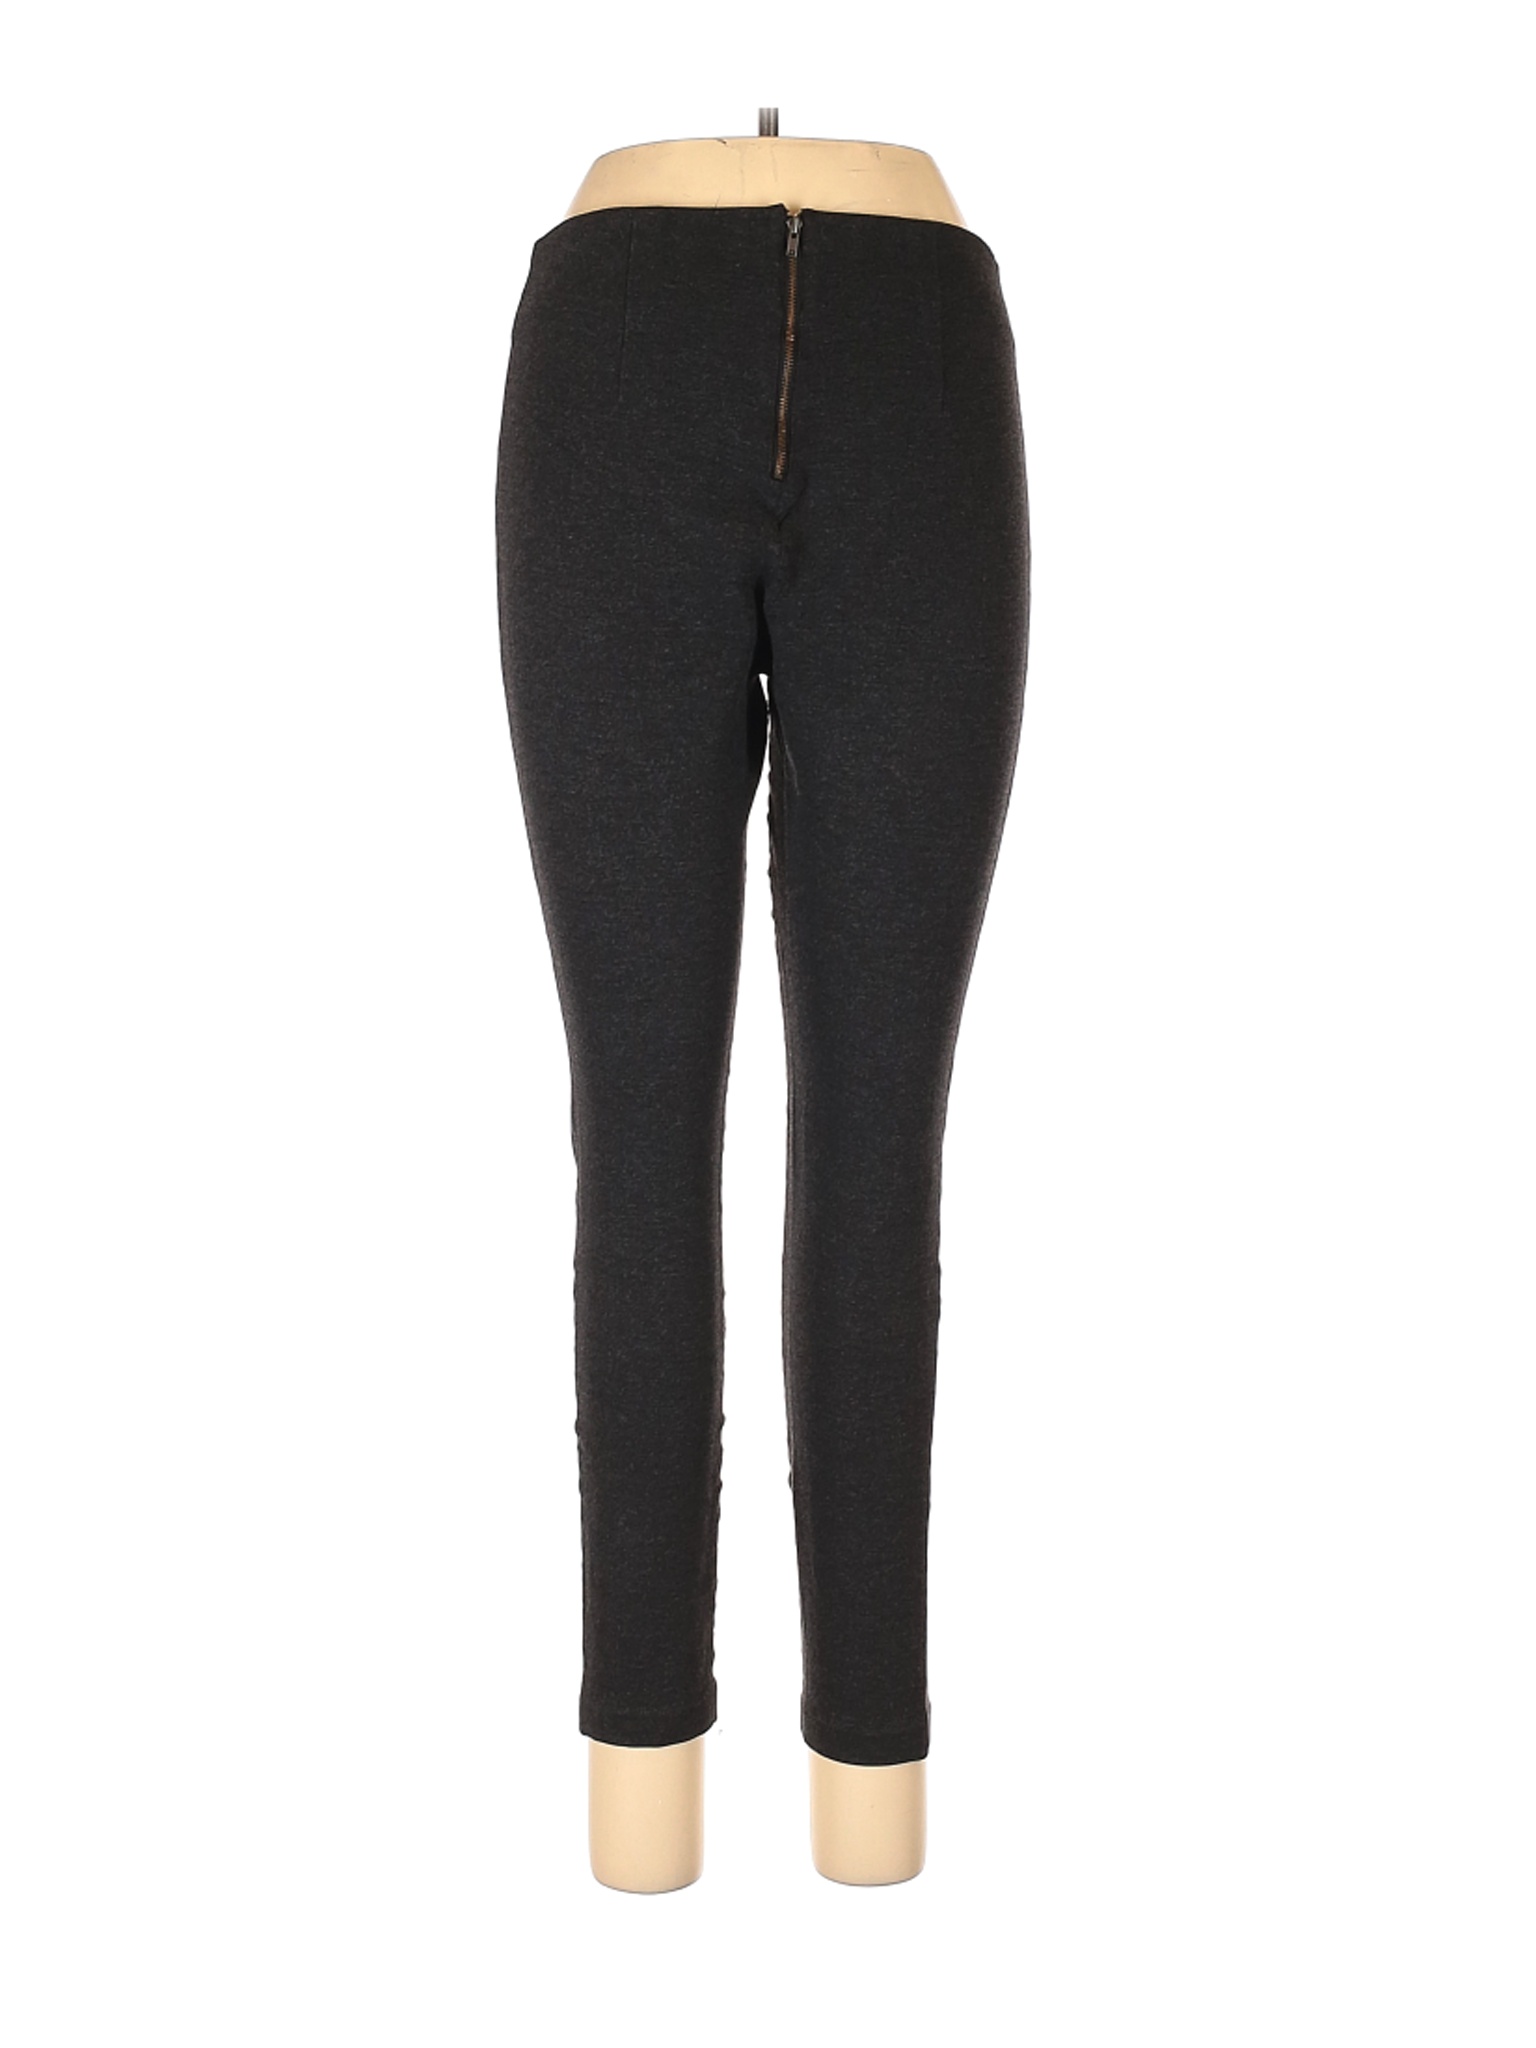 J.Crew Women Black Casual Pants 10 | eBay